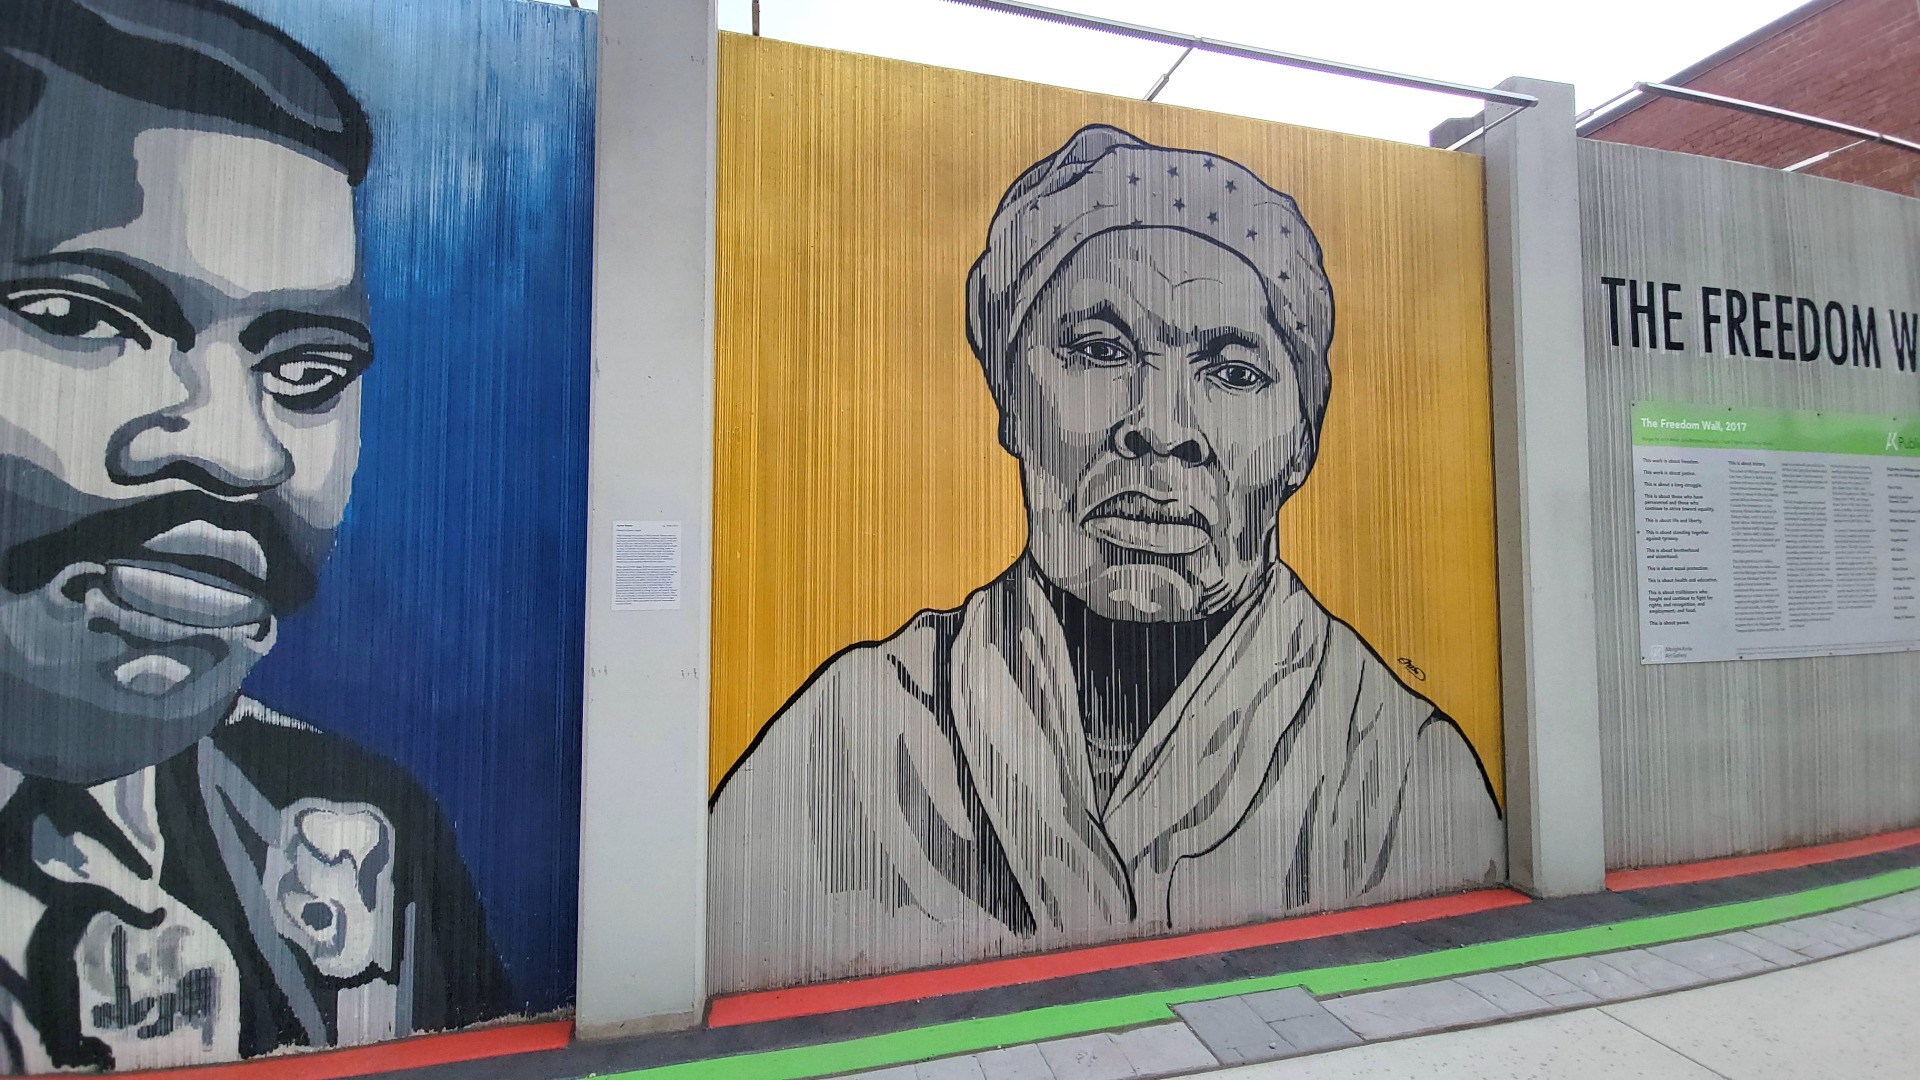 Harriet Tubman @ The Freedom Wall, Edreys Wajed, 2017. Image: courtesy Buffalo AKG Art Museum/Amanne Media. 